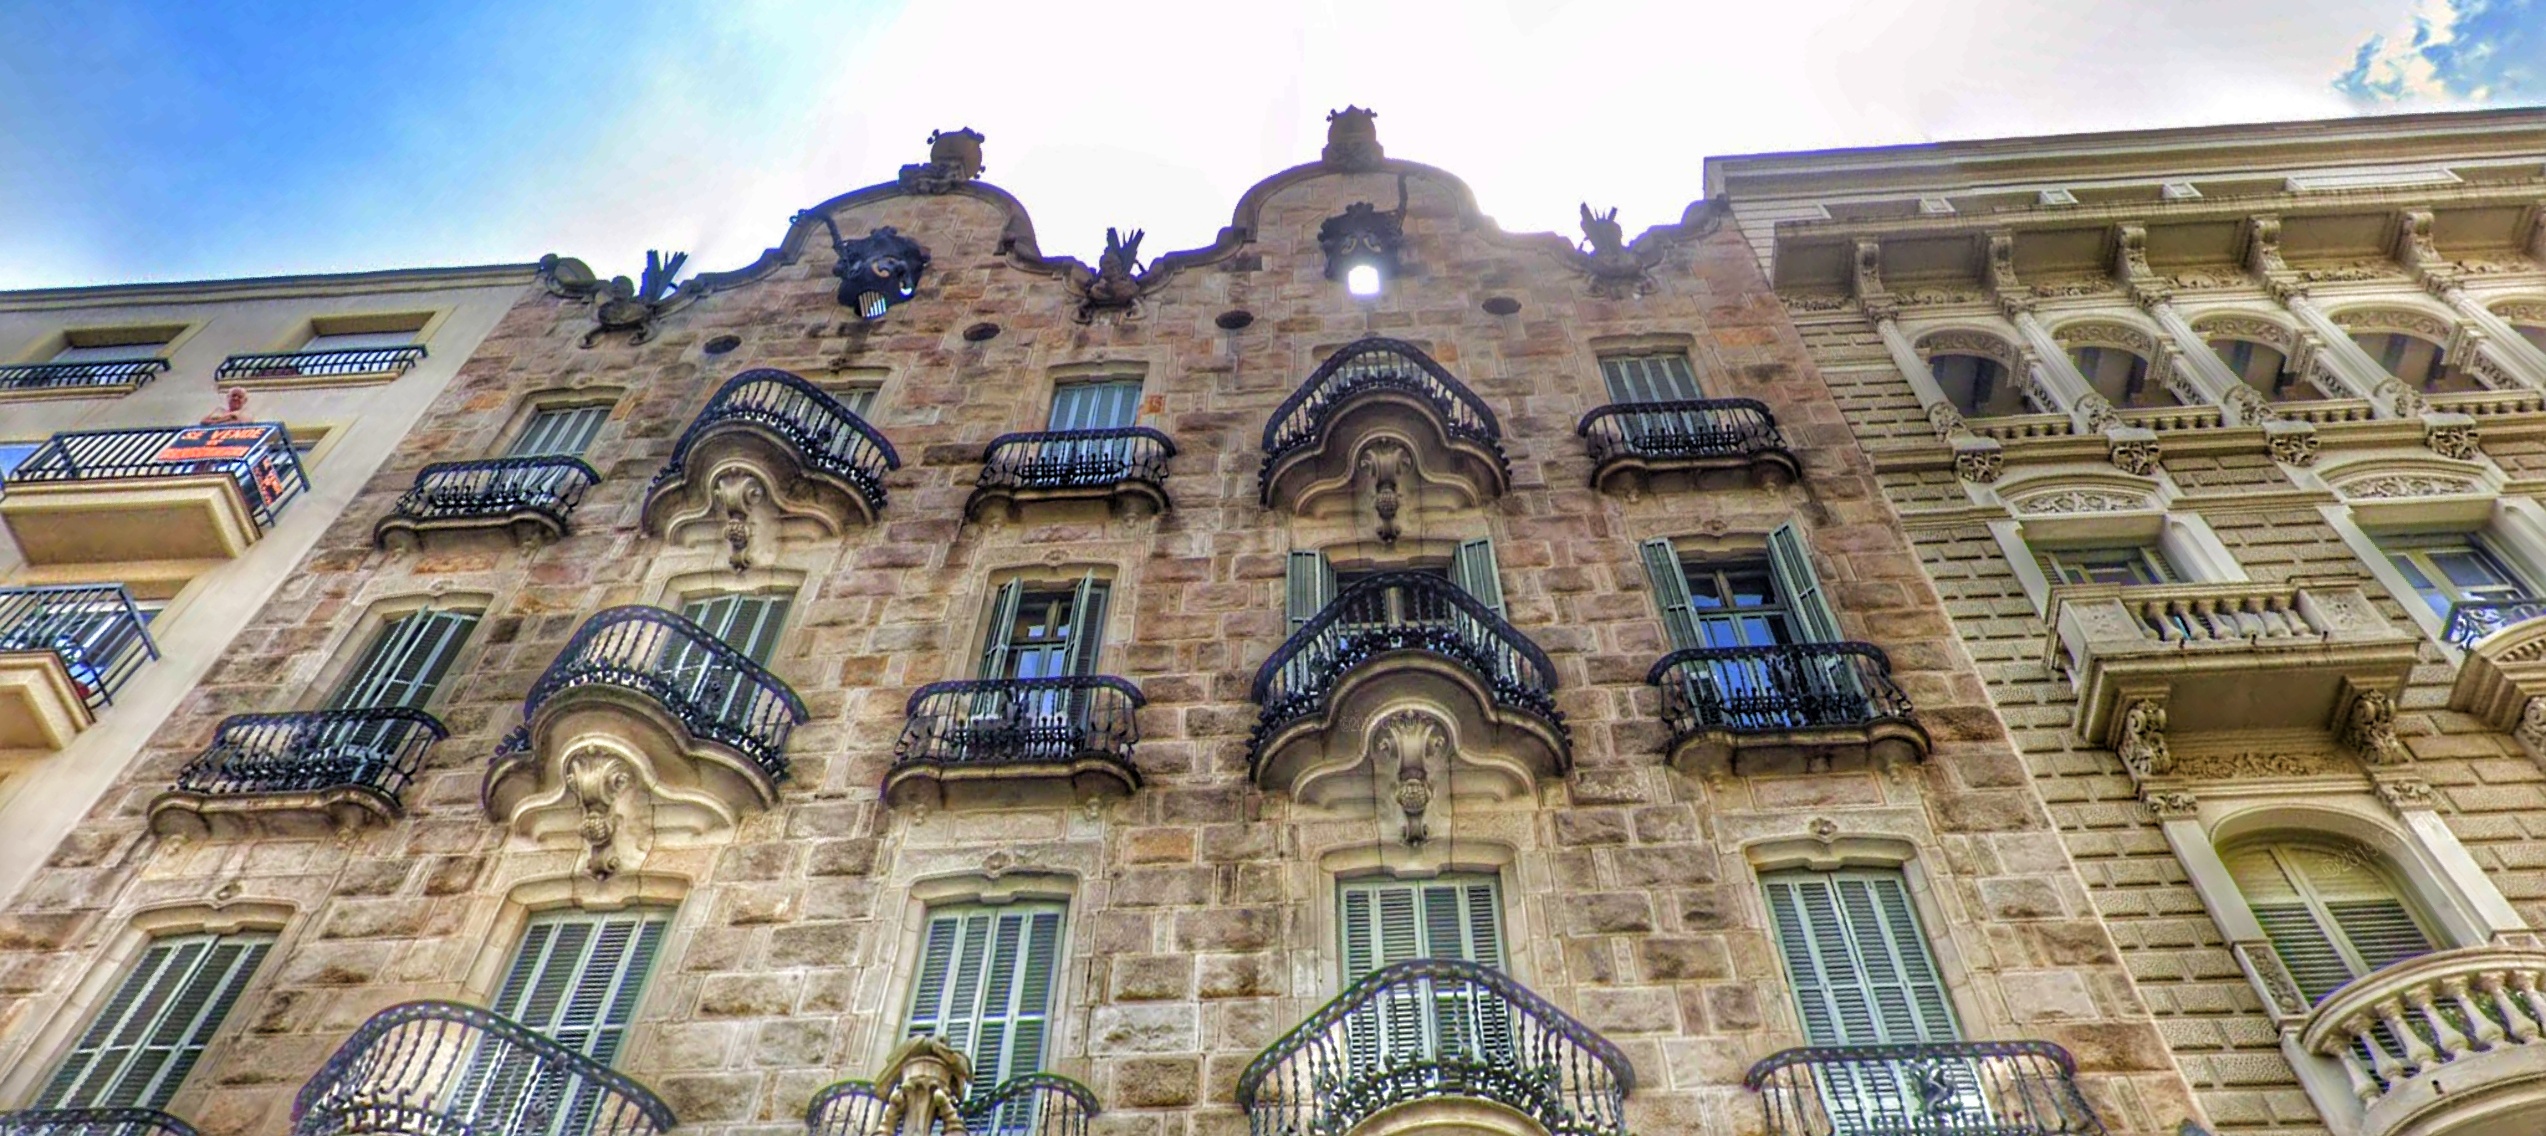 Casa Calvet by Gratis in Barcelona